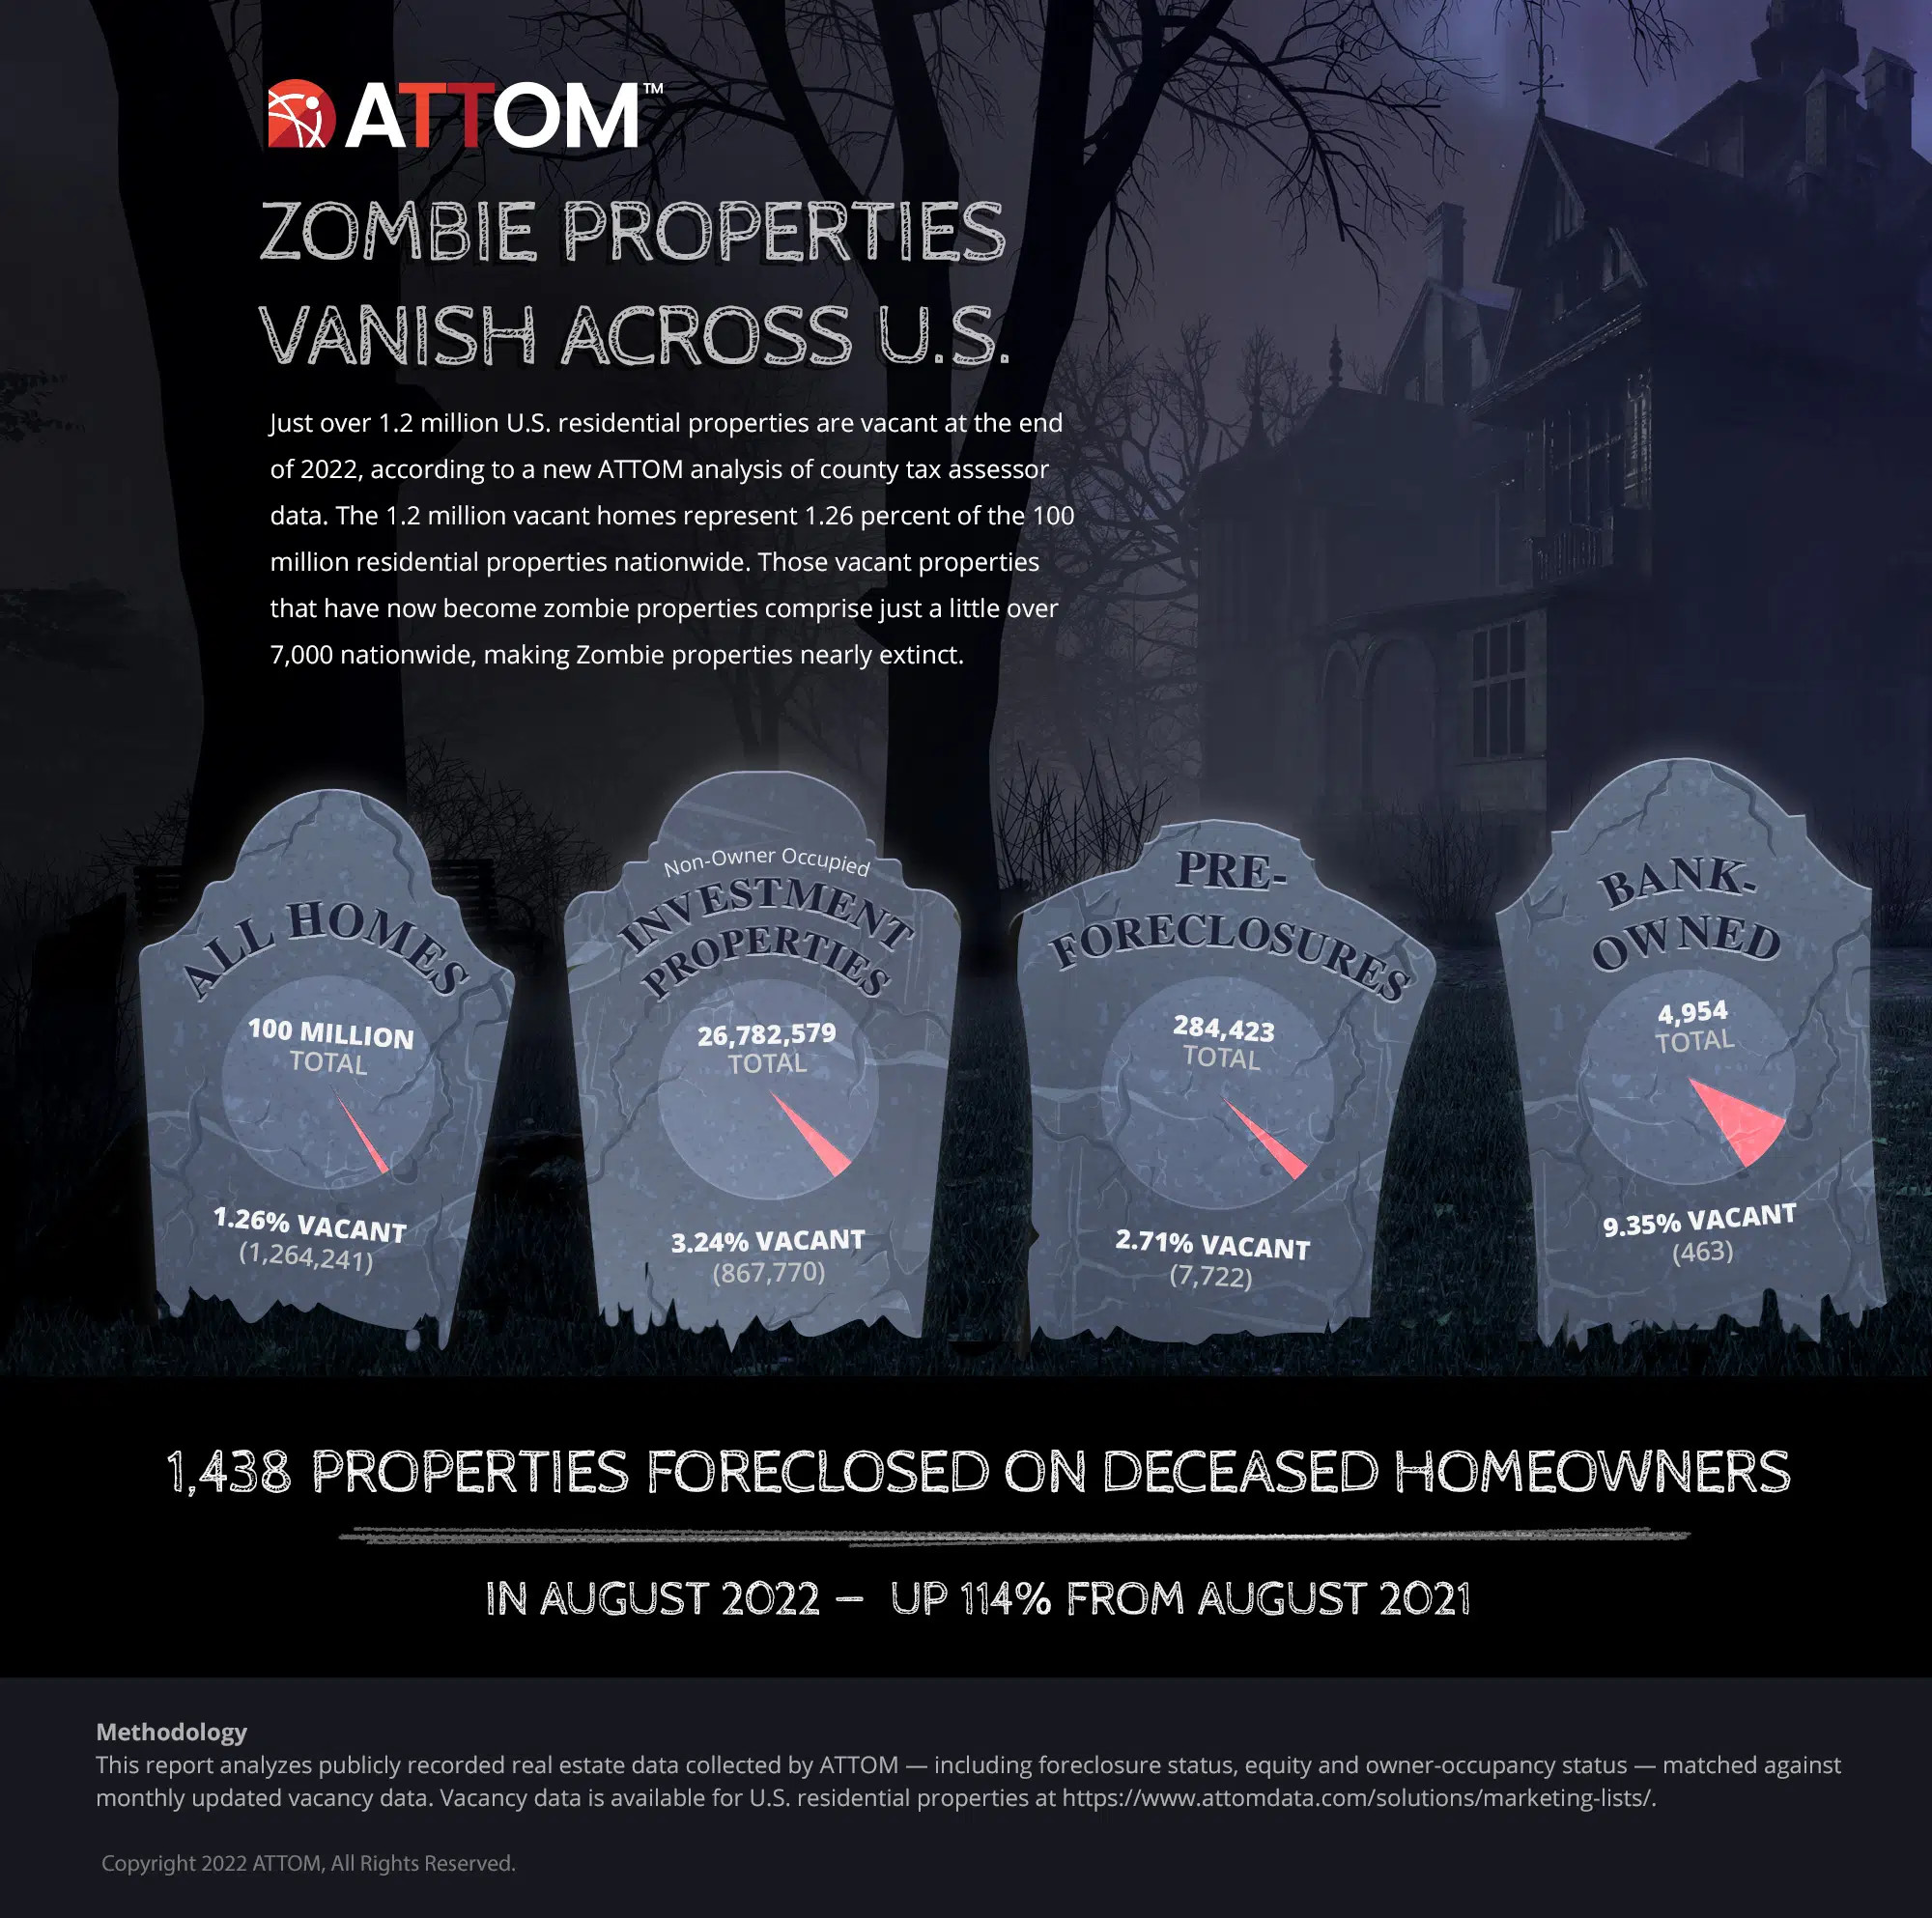 attom q4 2022 zombie foreclosure report